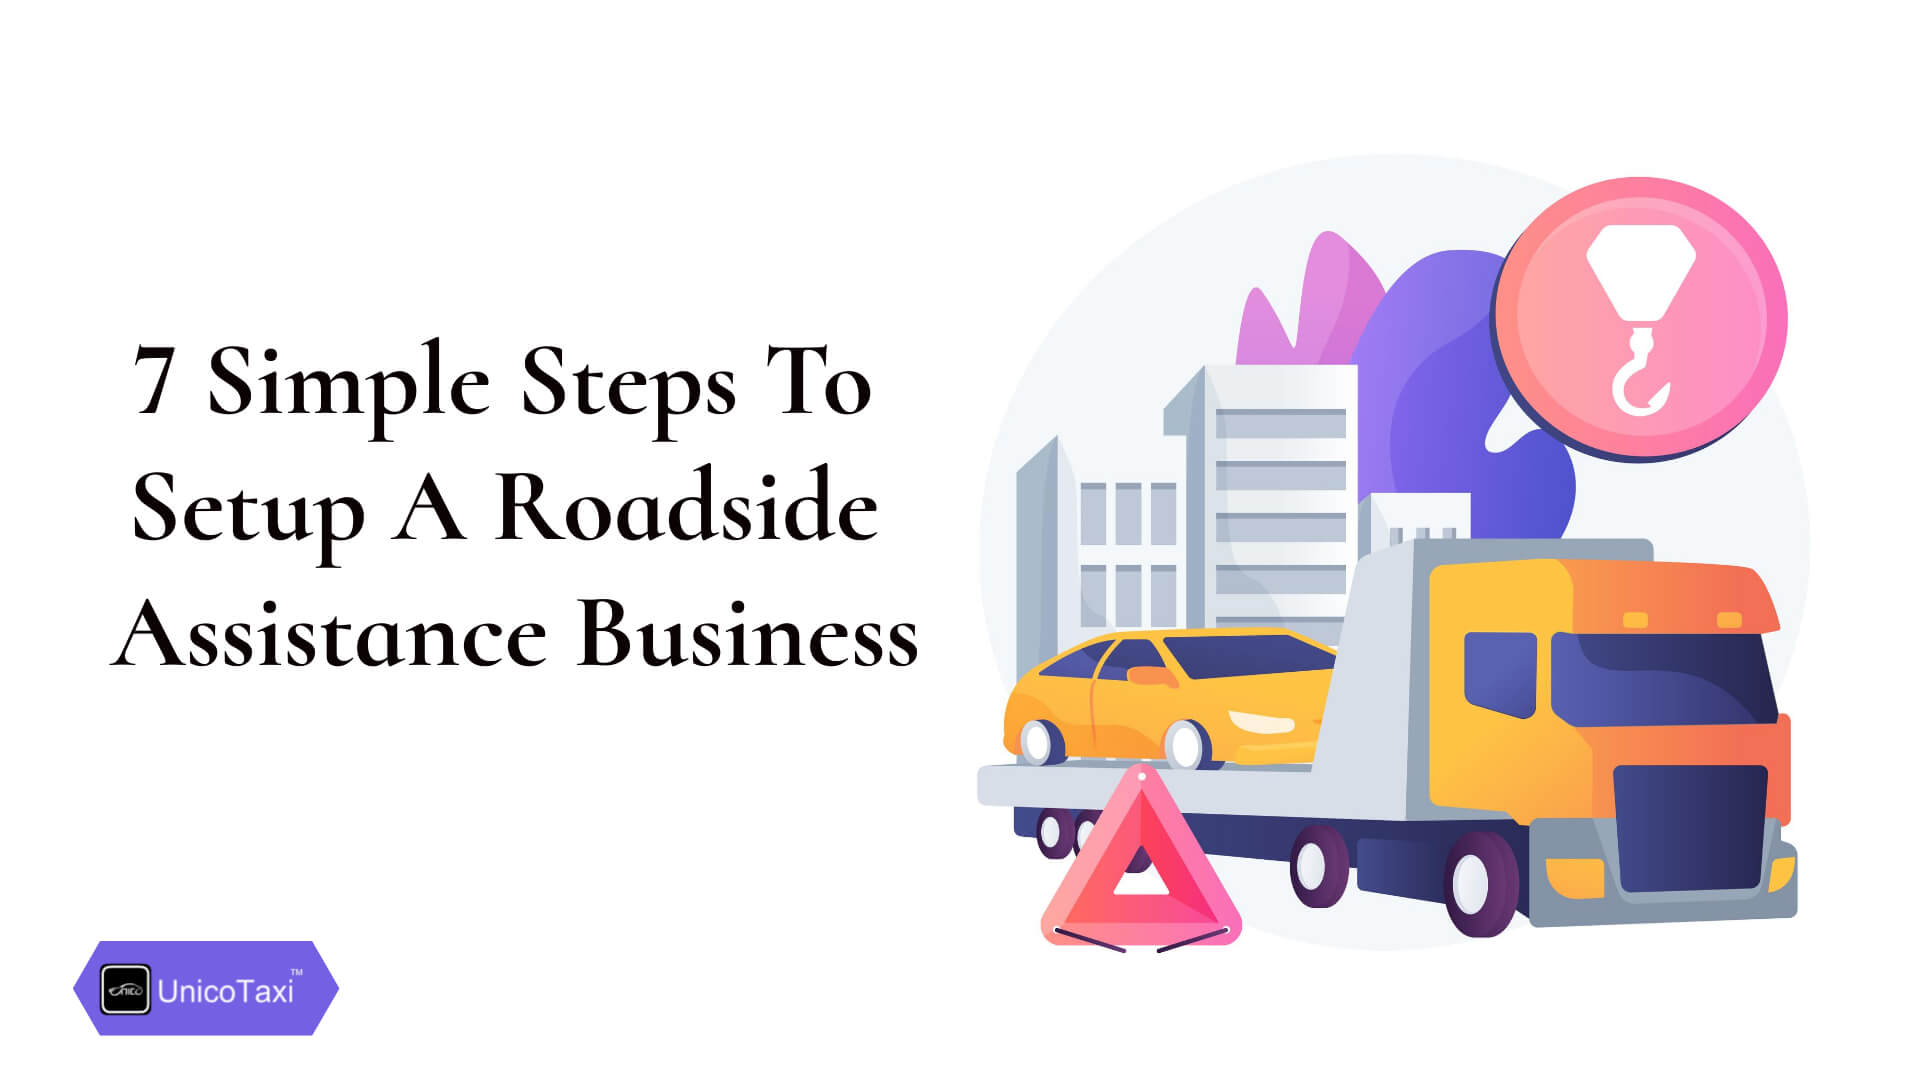 7 Simple Steps to Setup a Roadside Assistance Business